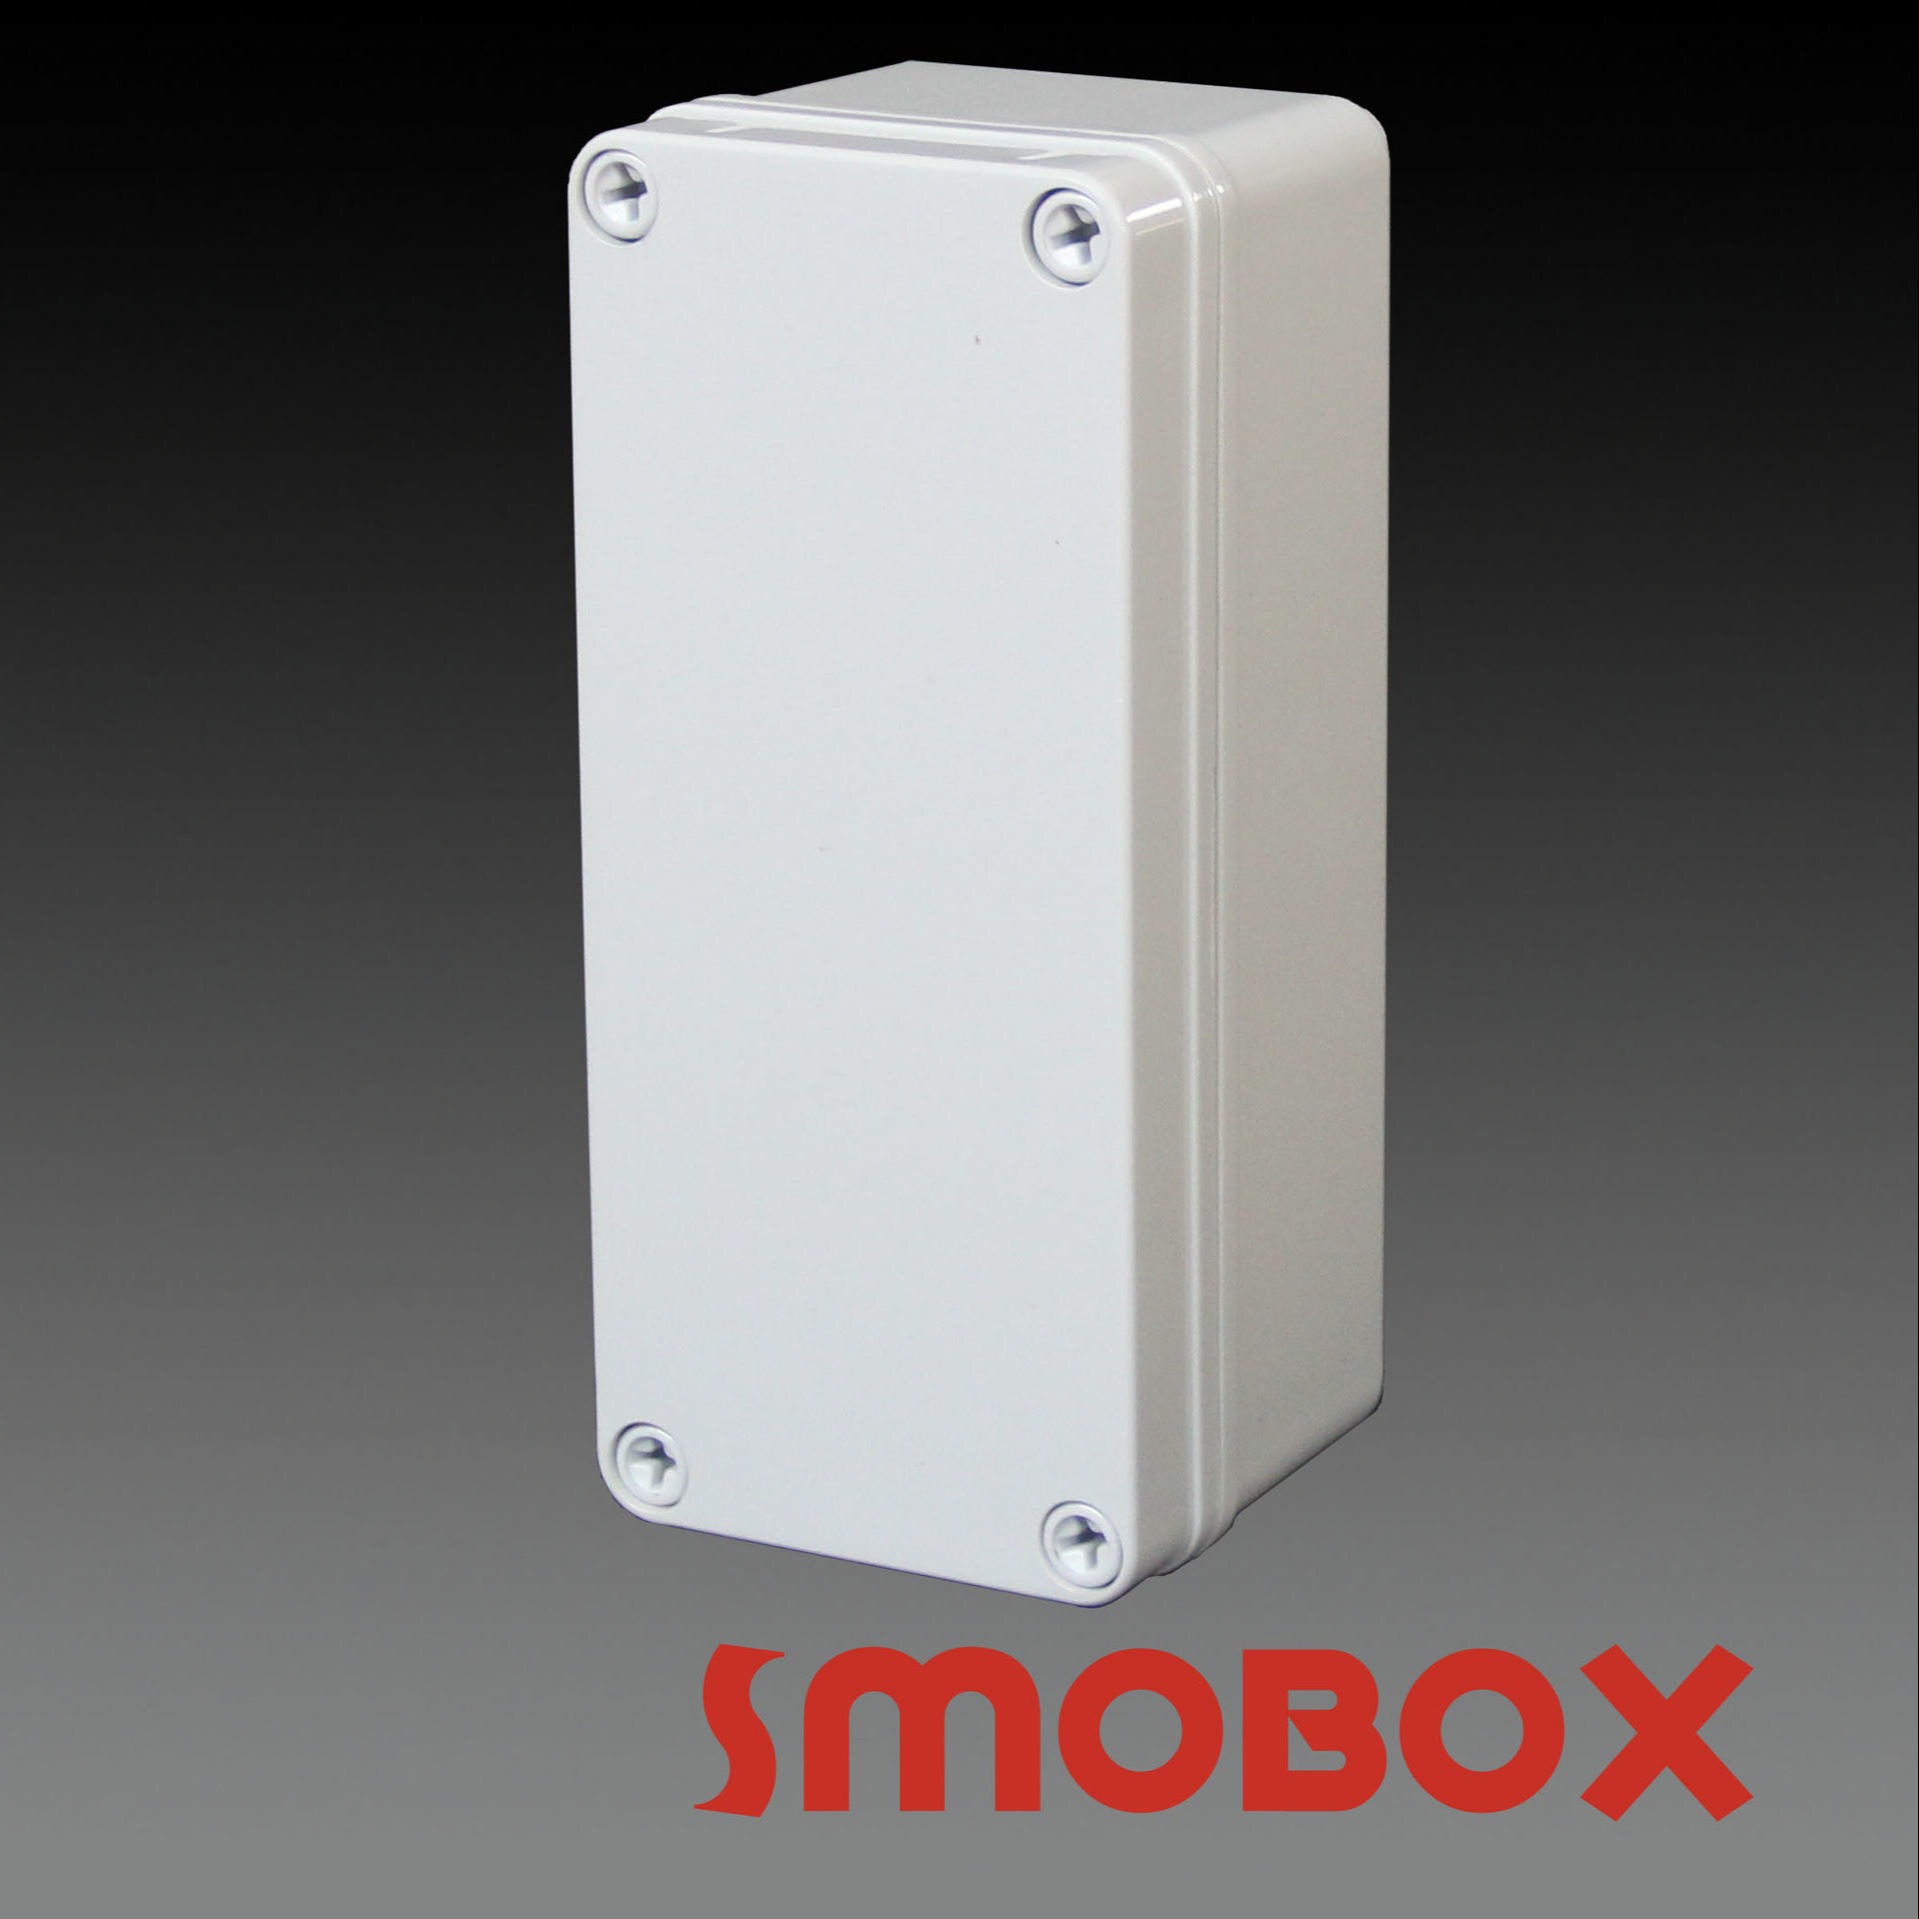 SMOBOX电气密封箱LD-192813塑料接线盒 防水接线箱 防尘分线盒  使用寿命长图片